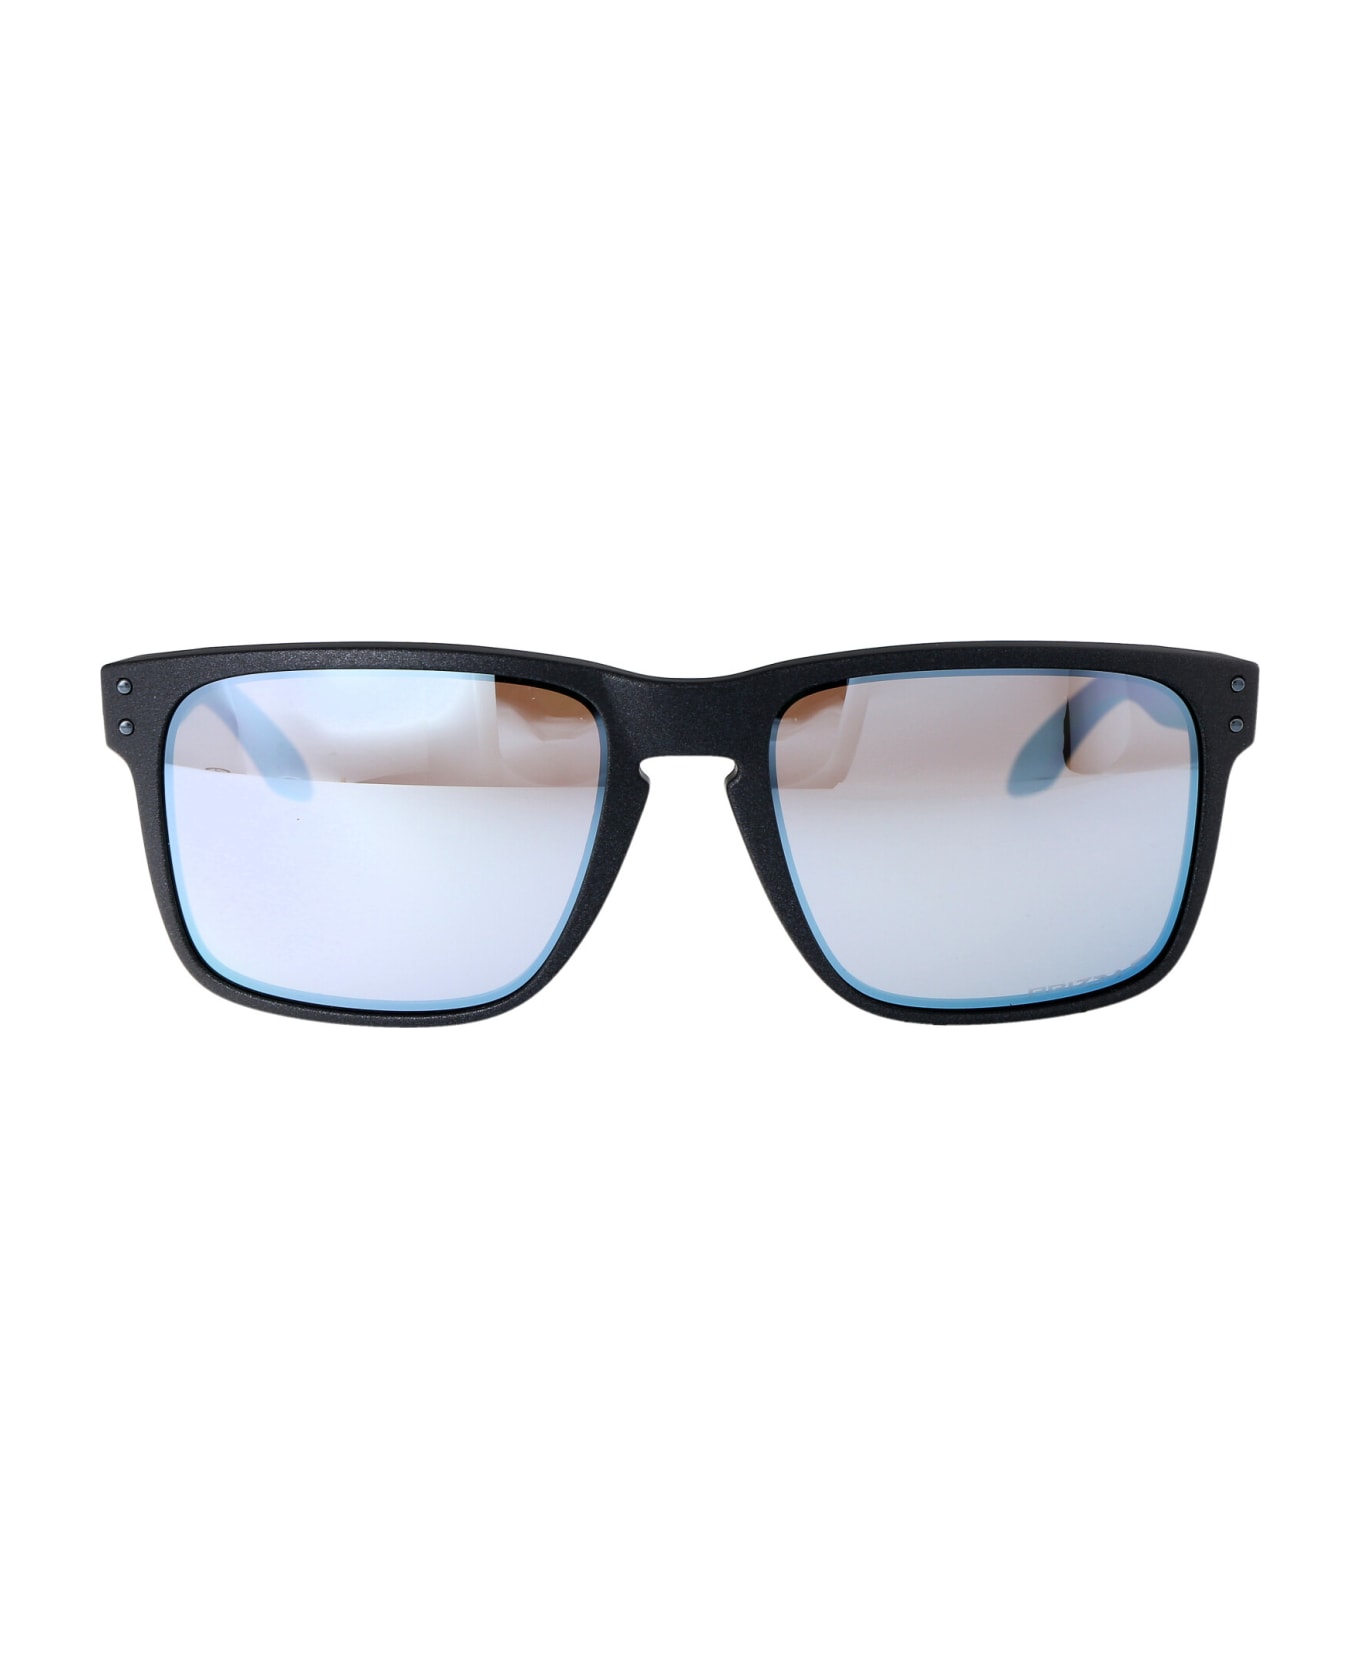 Oakley Holbrook Xl Sunglasses - Black サングラス